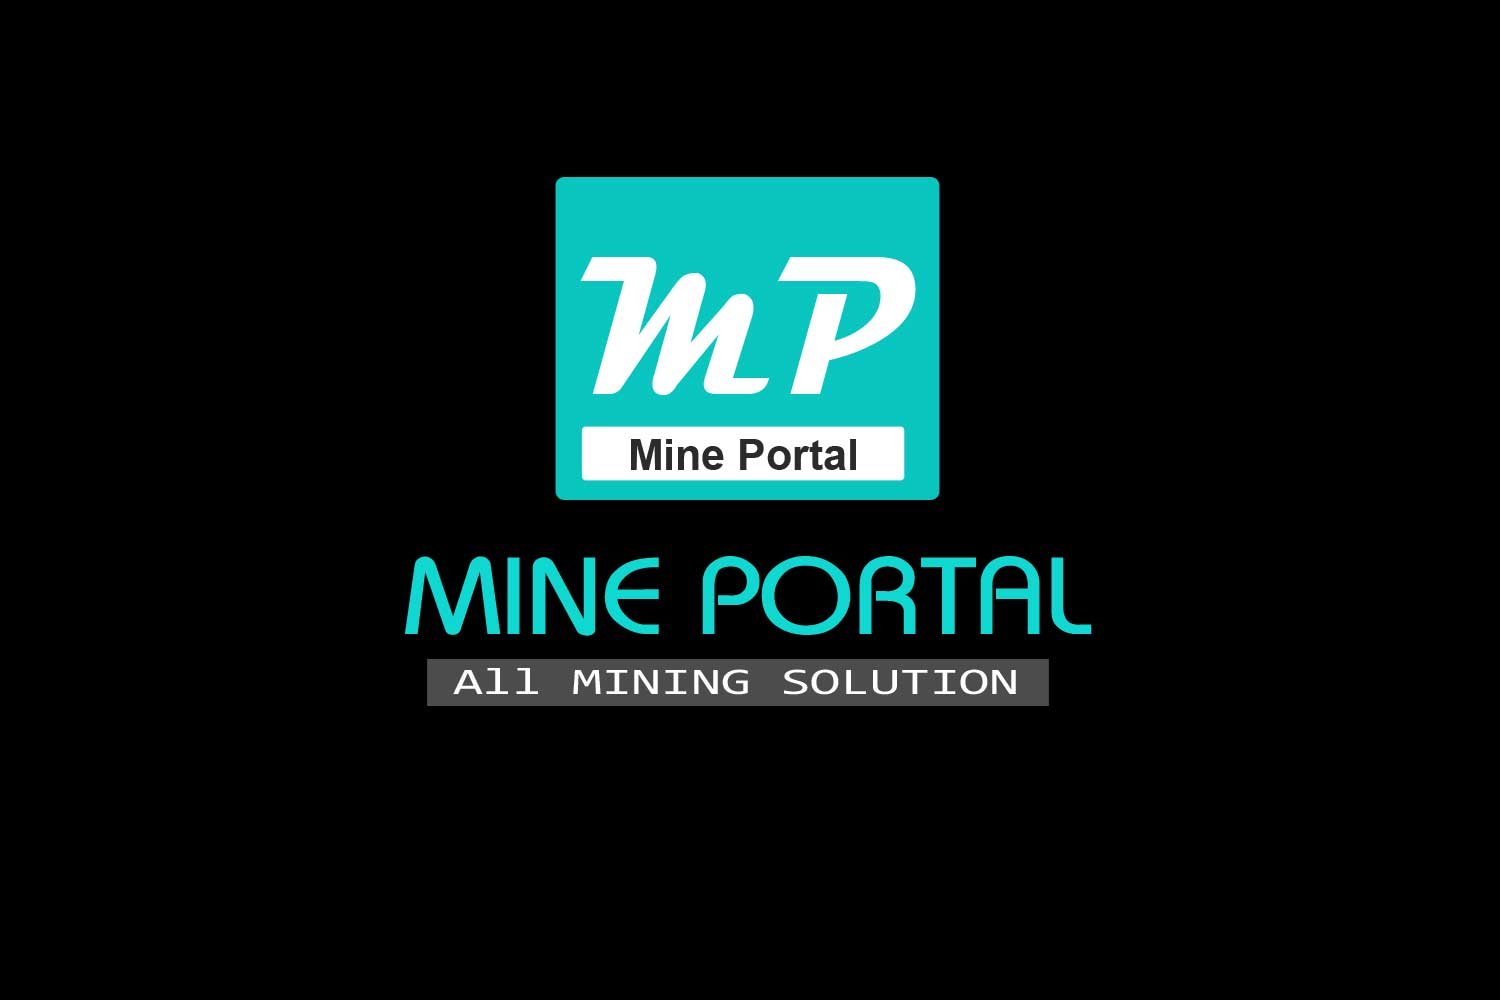 Indian Minerals Yearbook  2018